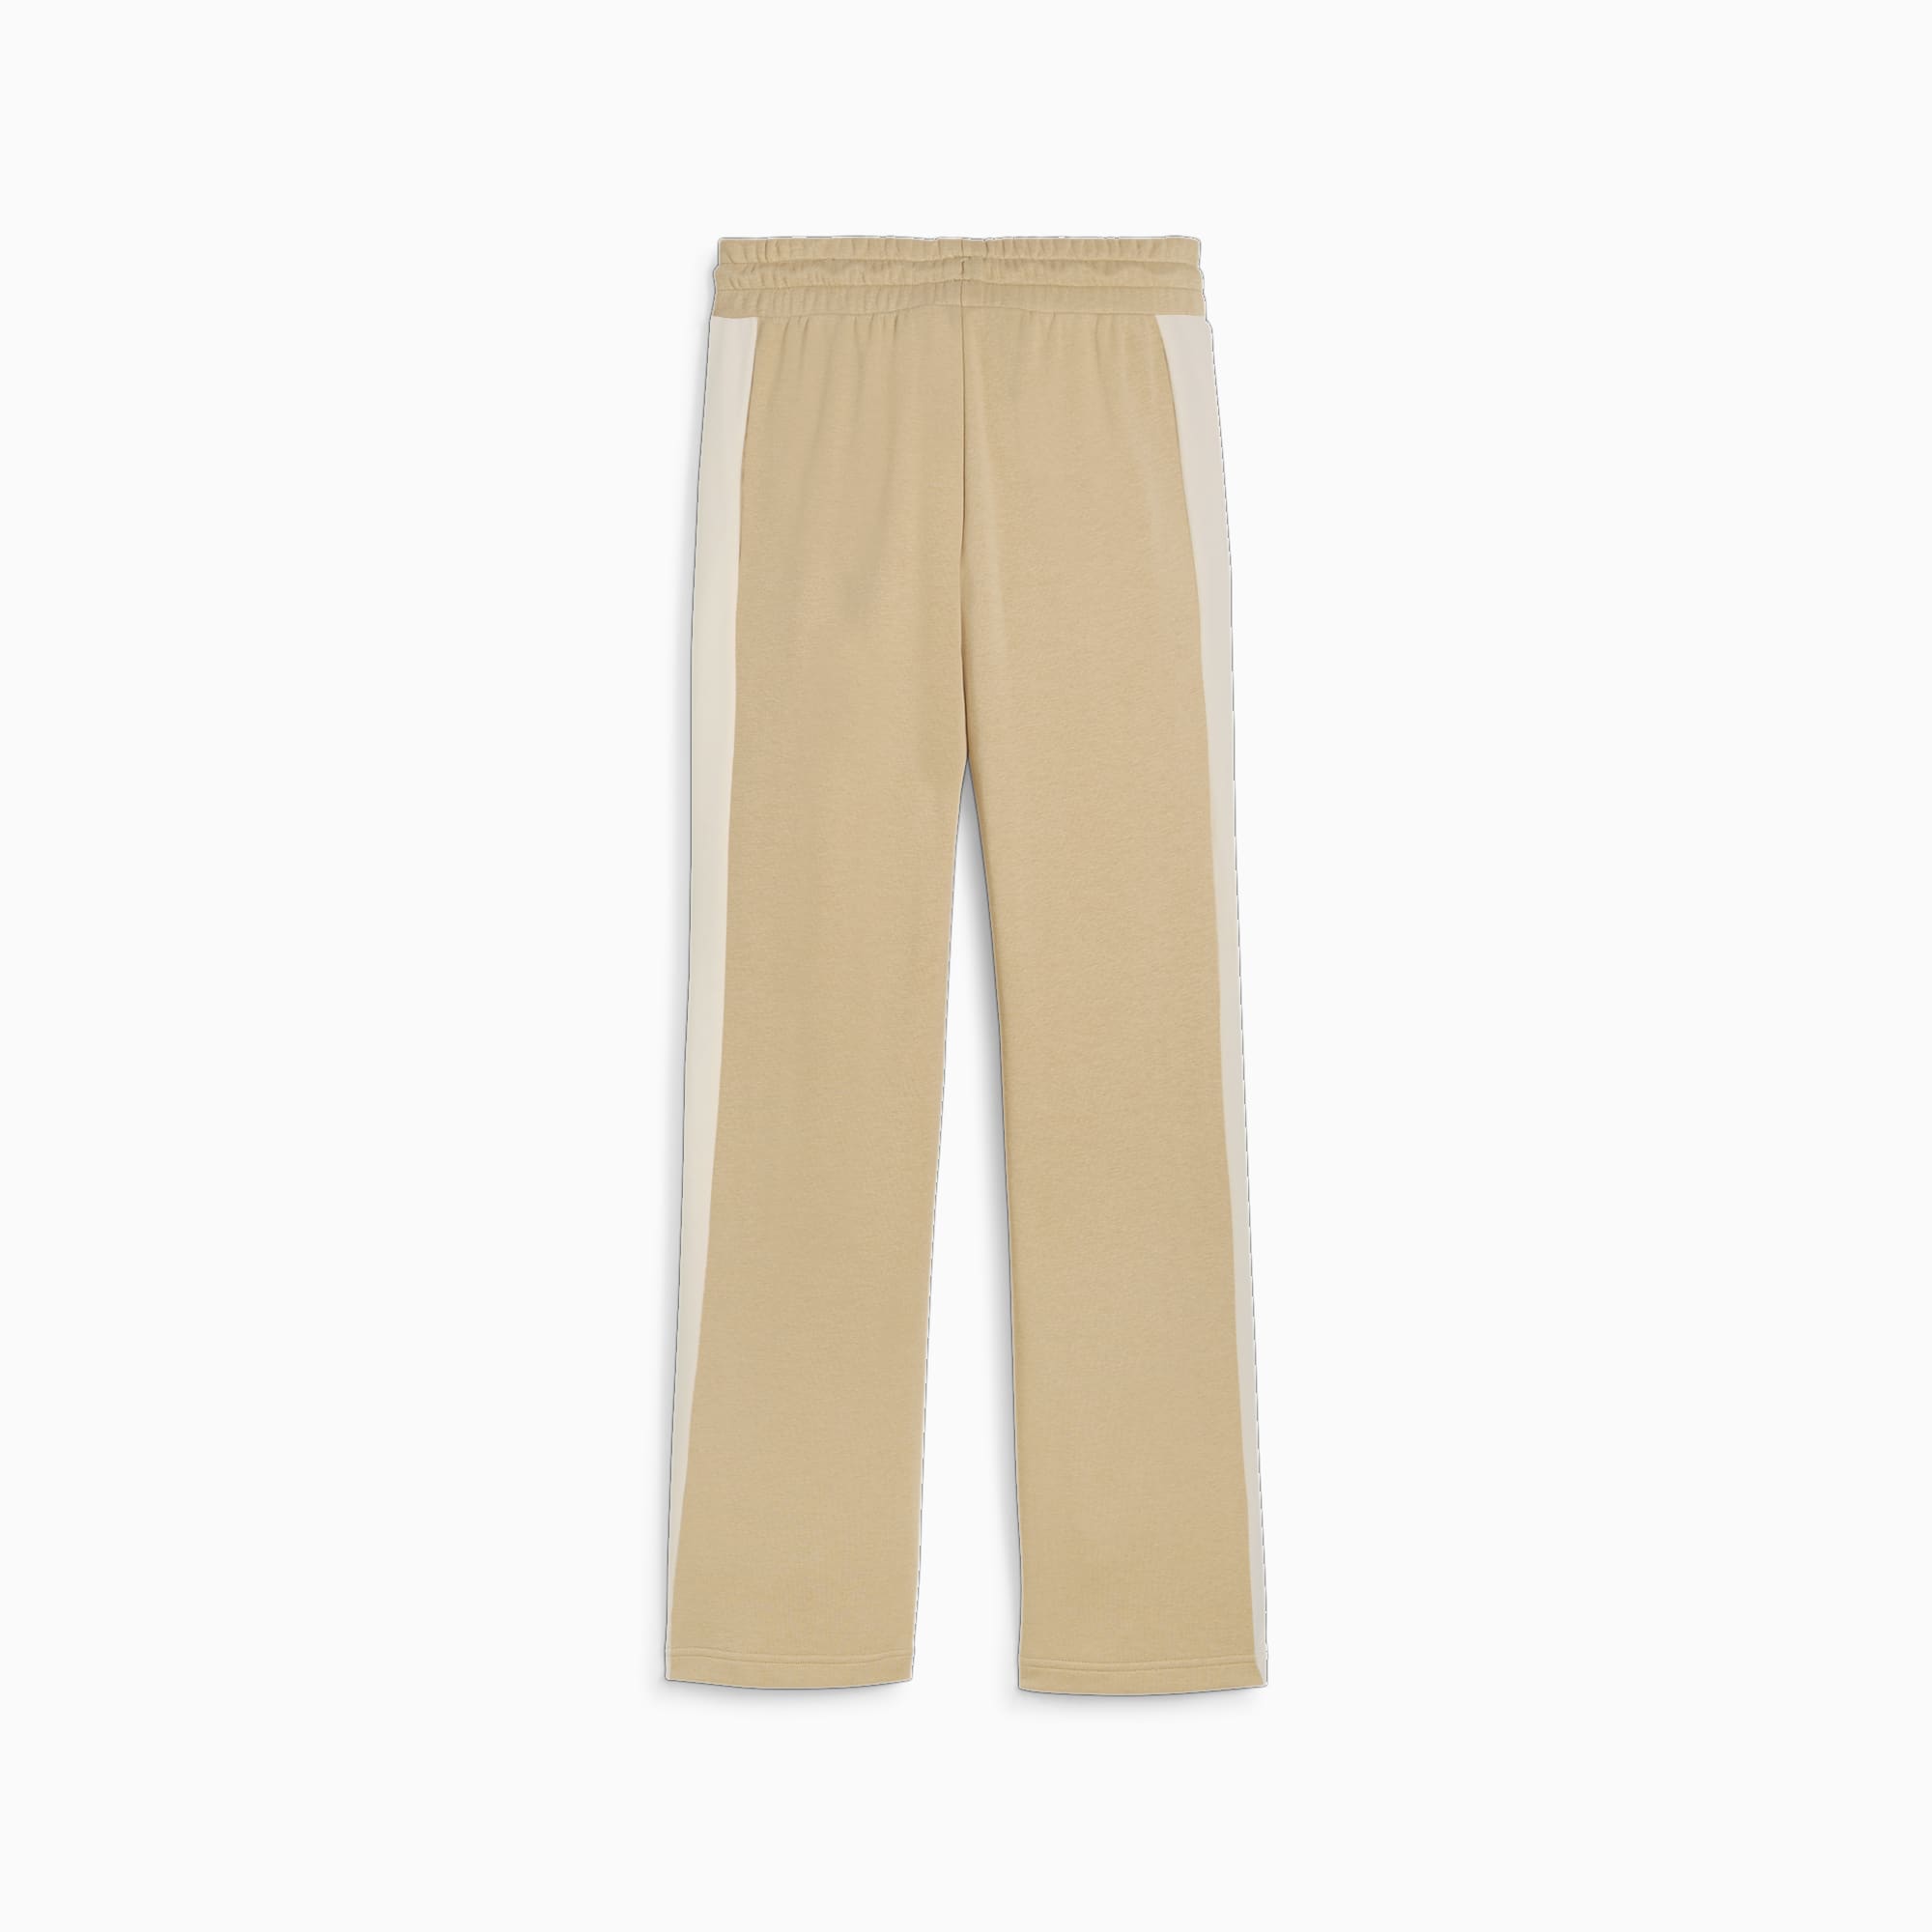 PUMA Iconic T7 Women's Straight Pants, Prairie Tan, Size M, Clothing